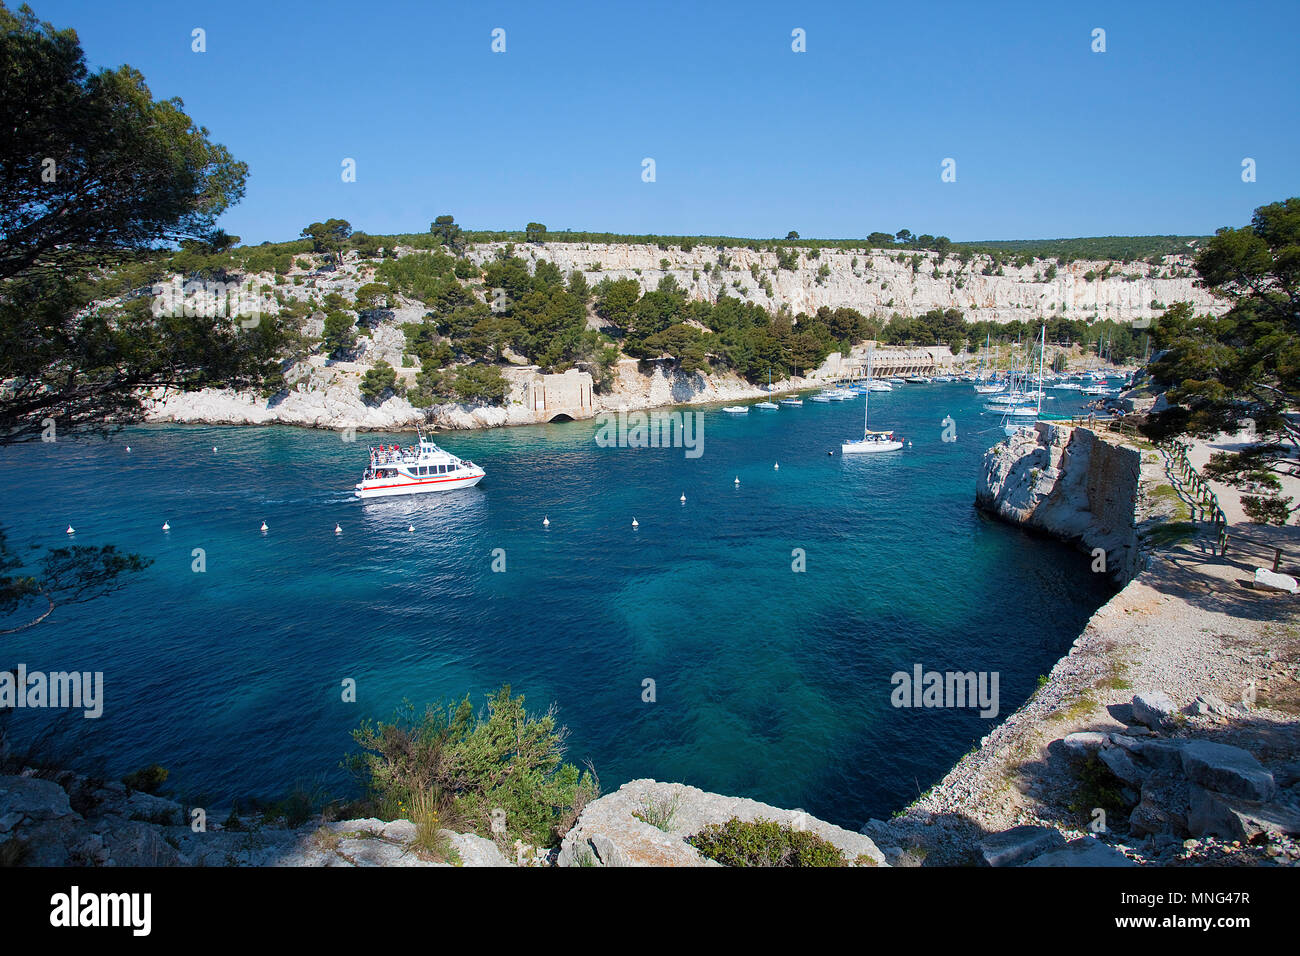 Calanque de Port Miou, natural fjord used as Marina, Calanques, Bouches-du-Rhone, Côte d’Azur, South France, France, Europe Stock Photo